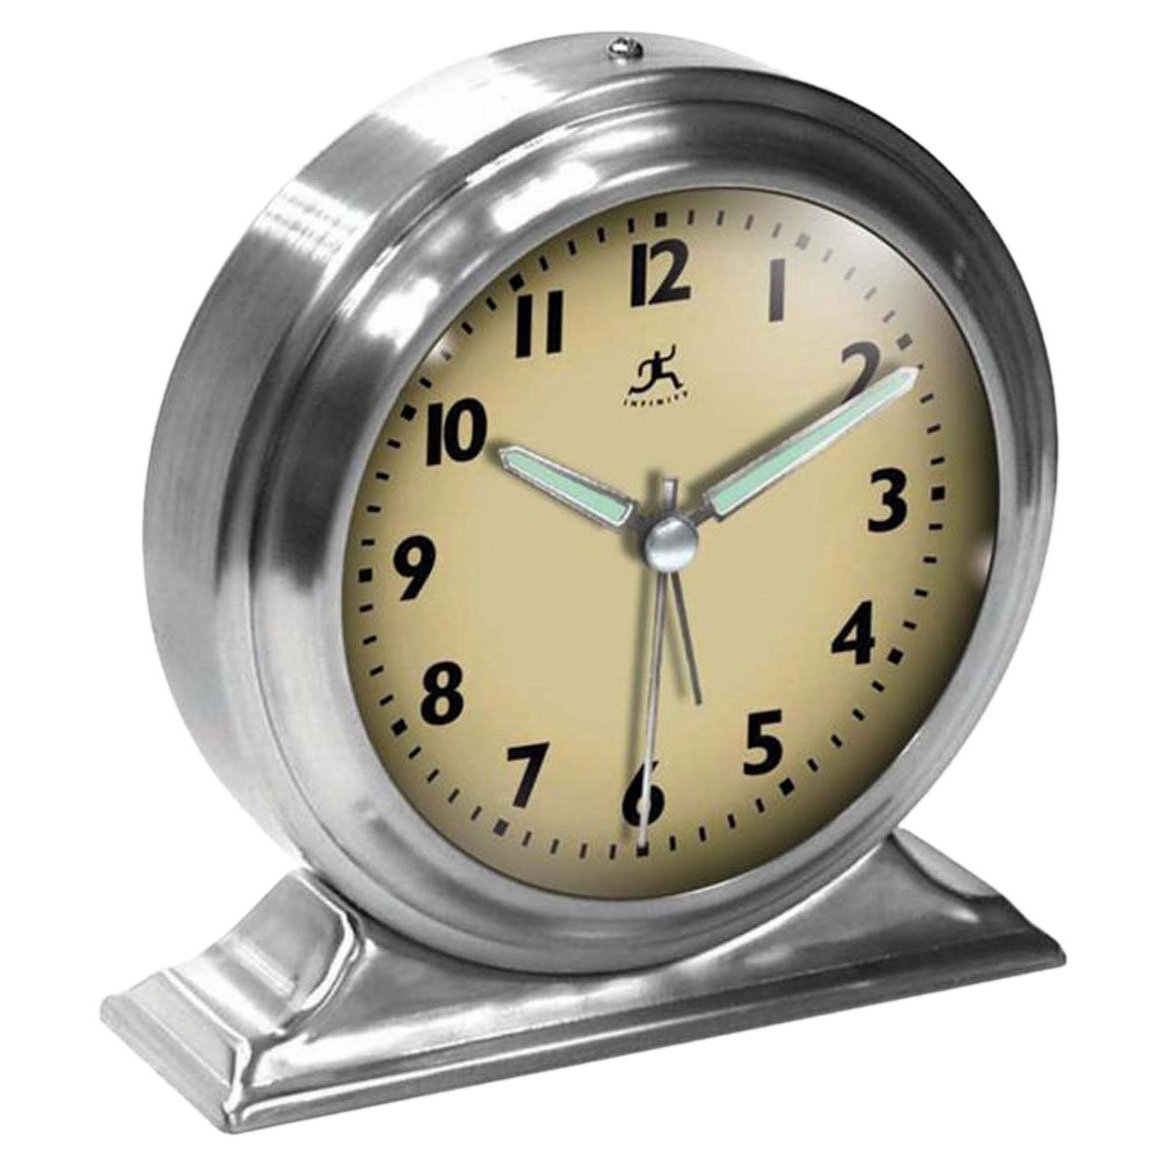 Infinity Instruments Brushed Nickel Metal Alarm Clock